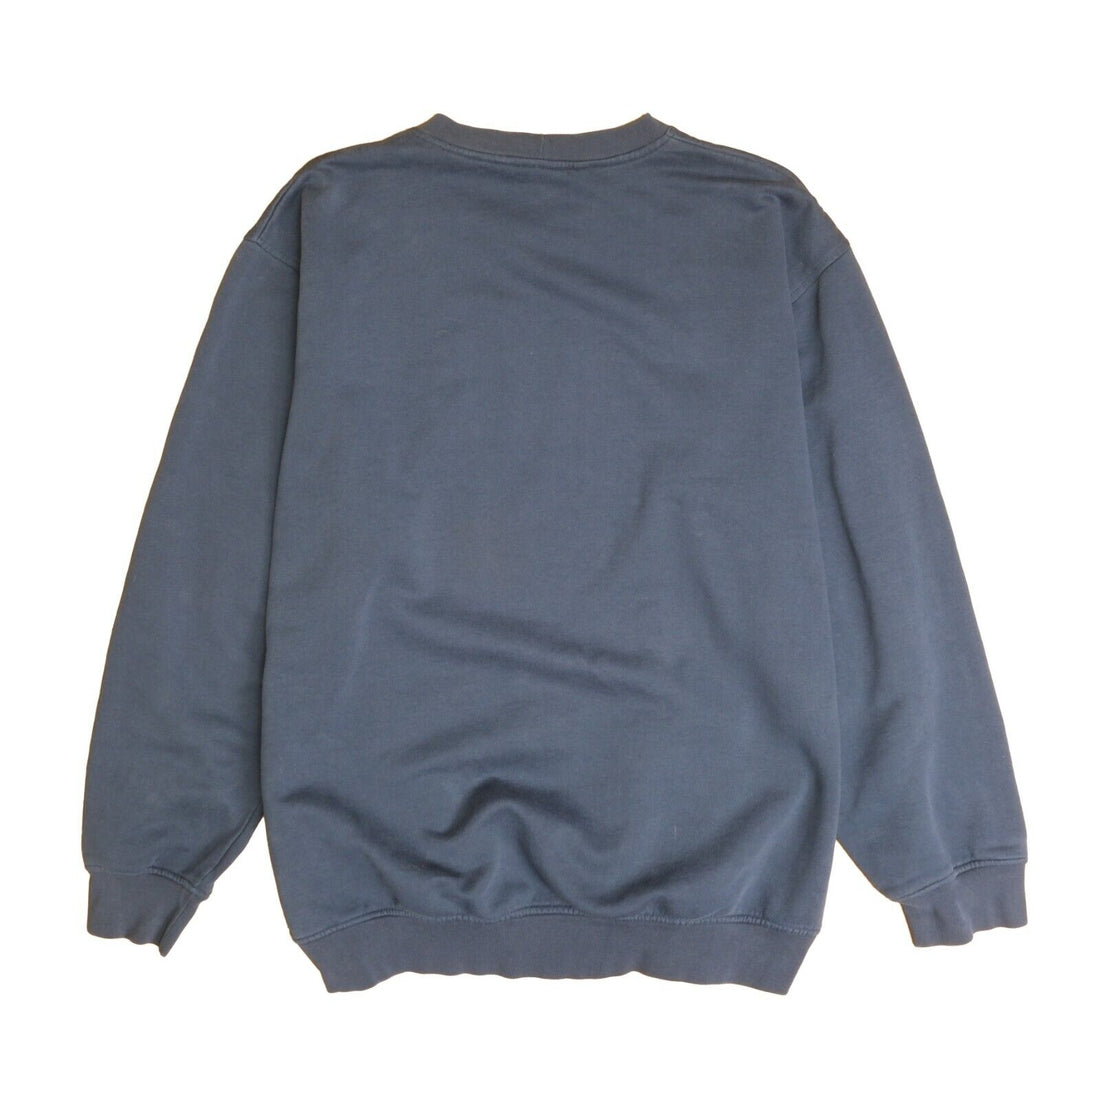 Vintage Nike Spell Out Sweatshirt Crewneck Size XL Blue